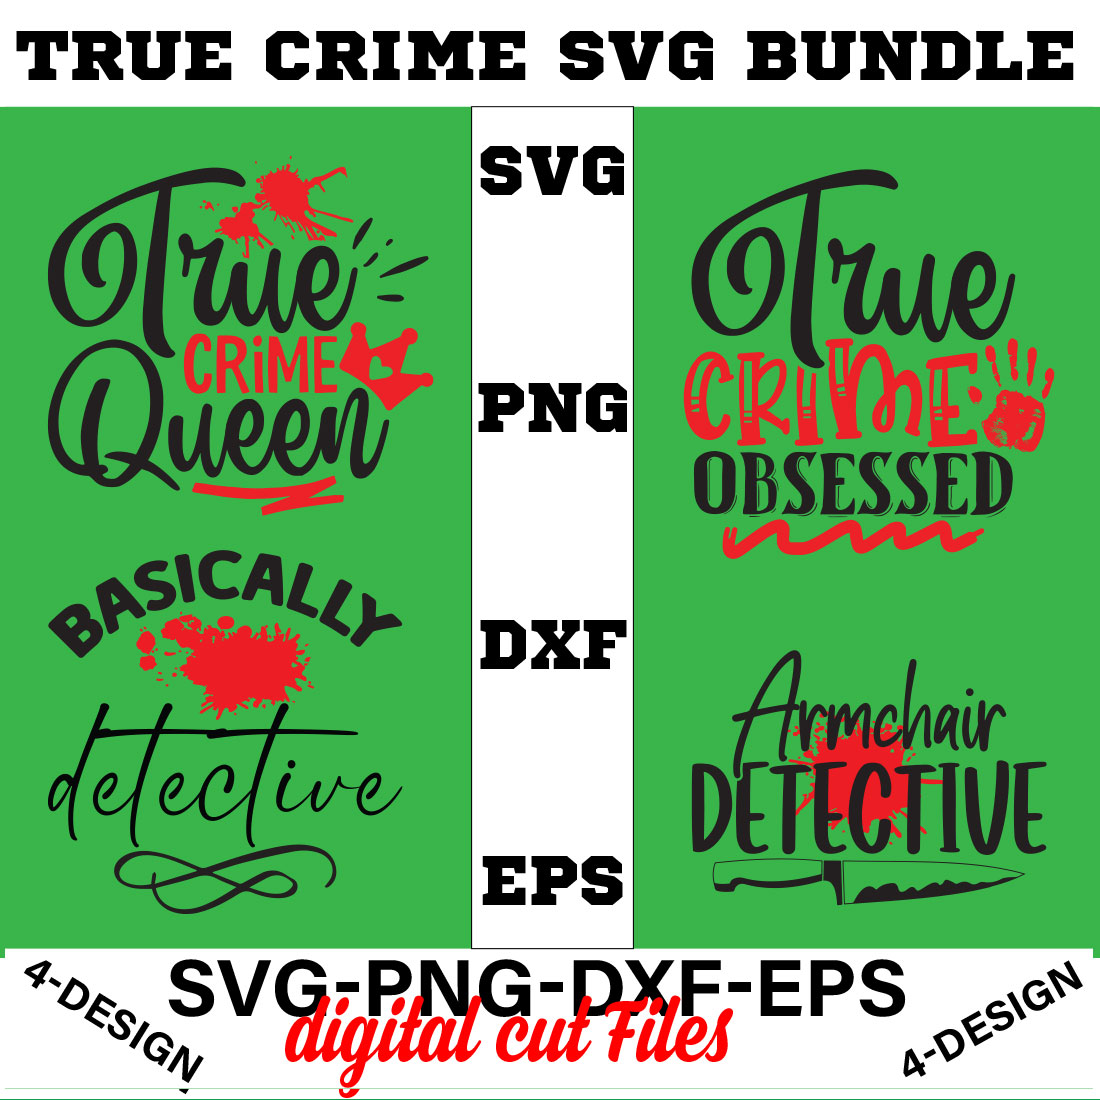 True Crime SVG Bundle Vol-03 cover image.